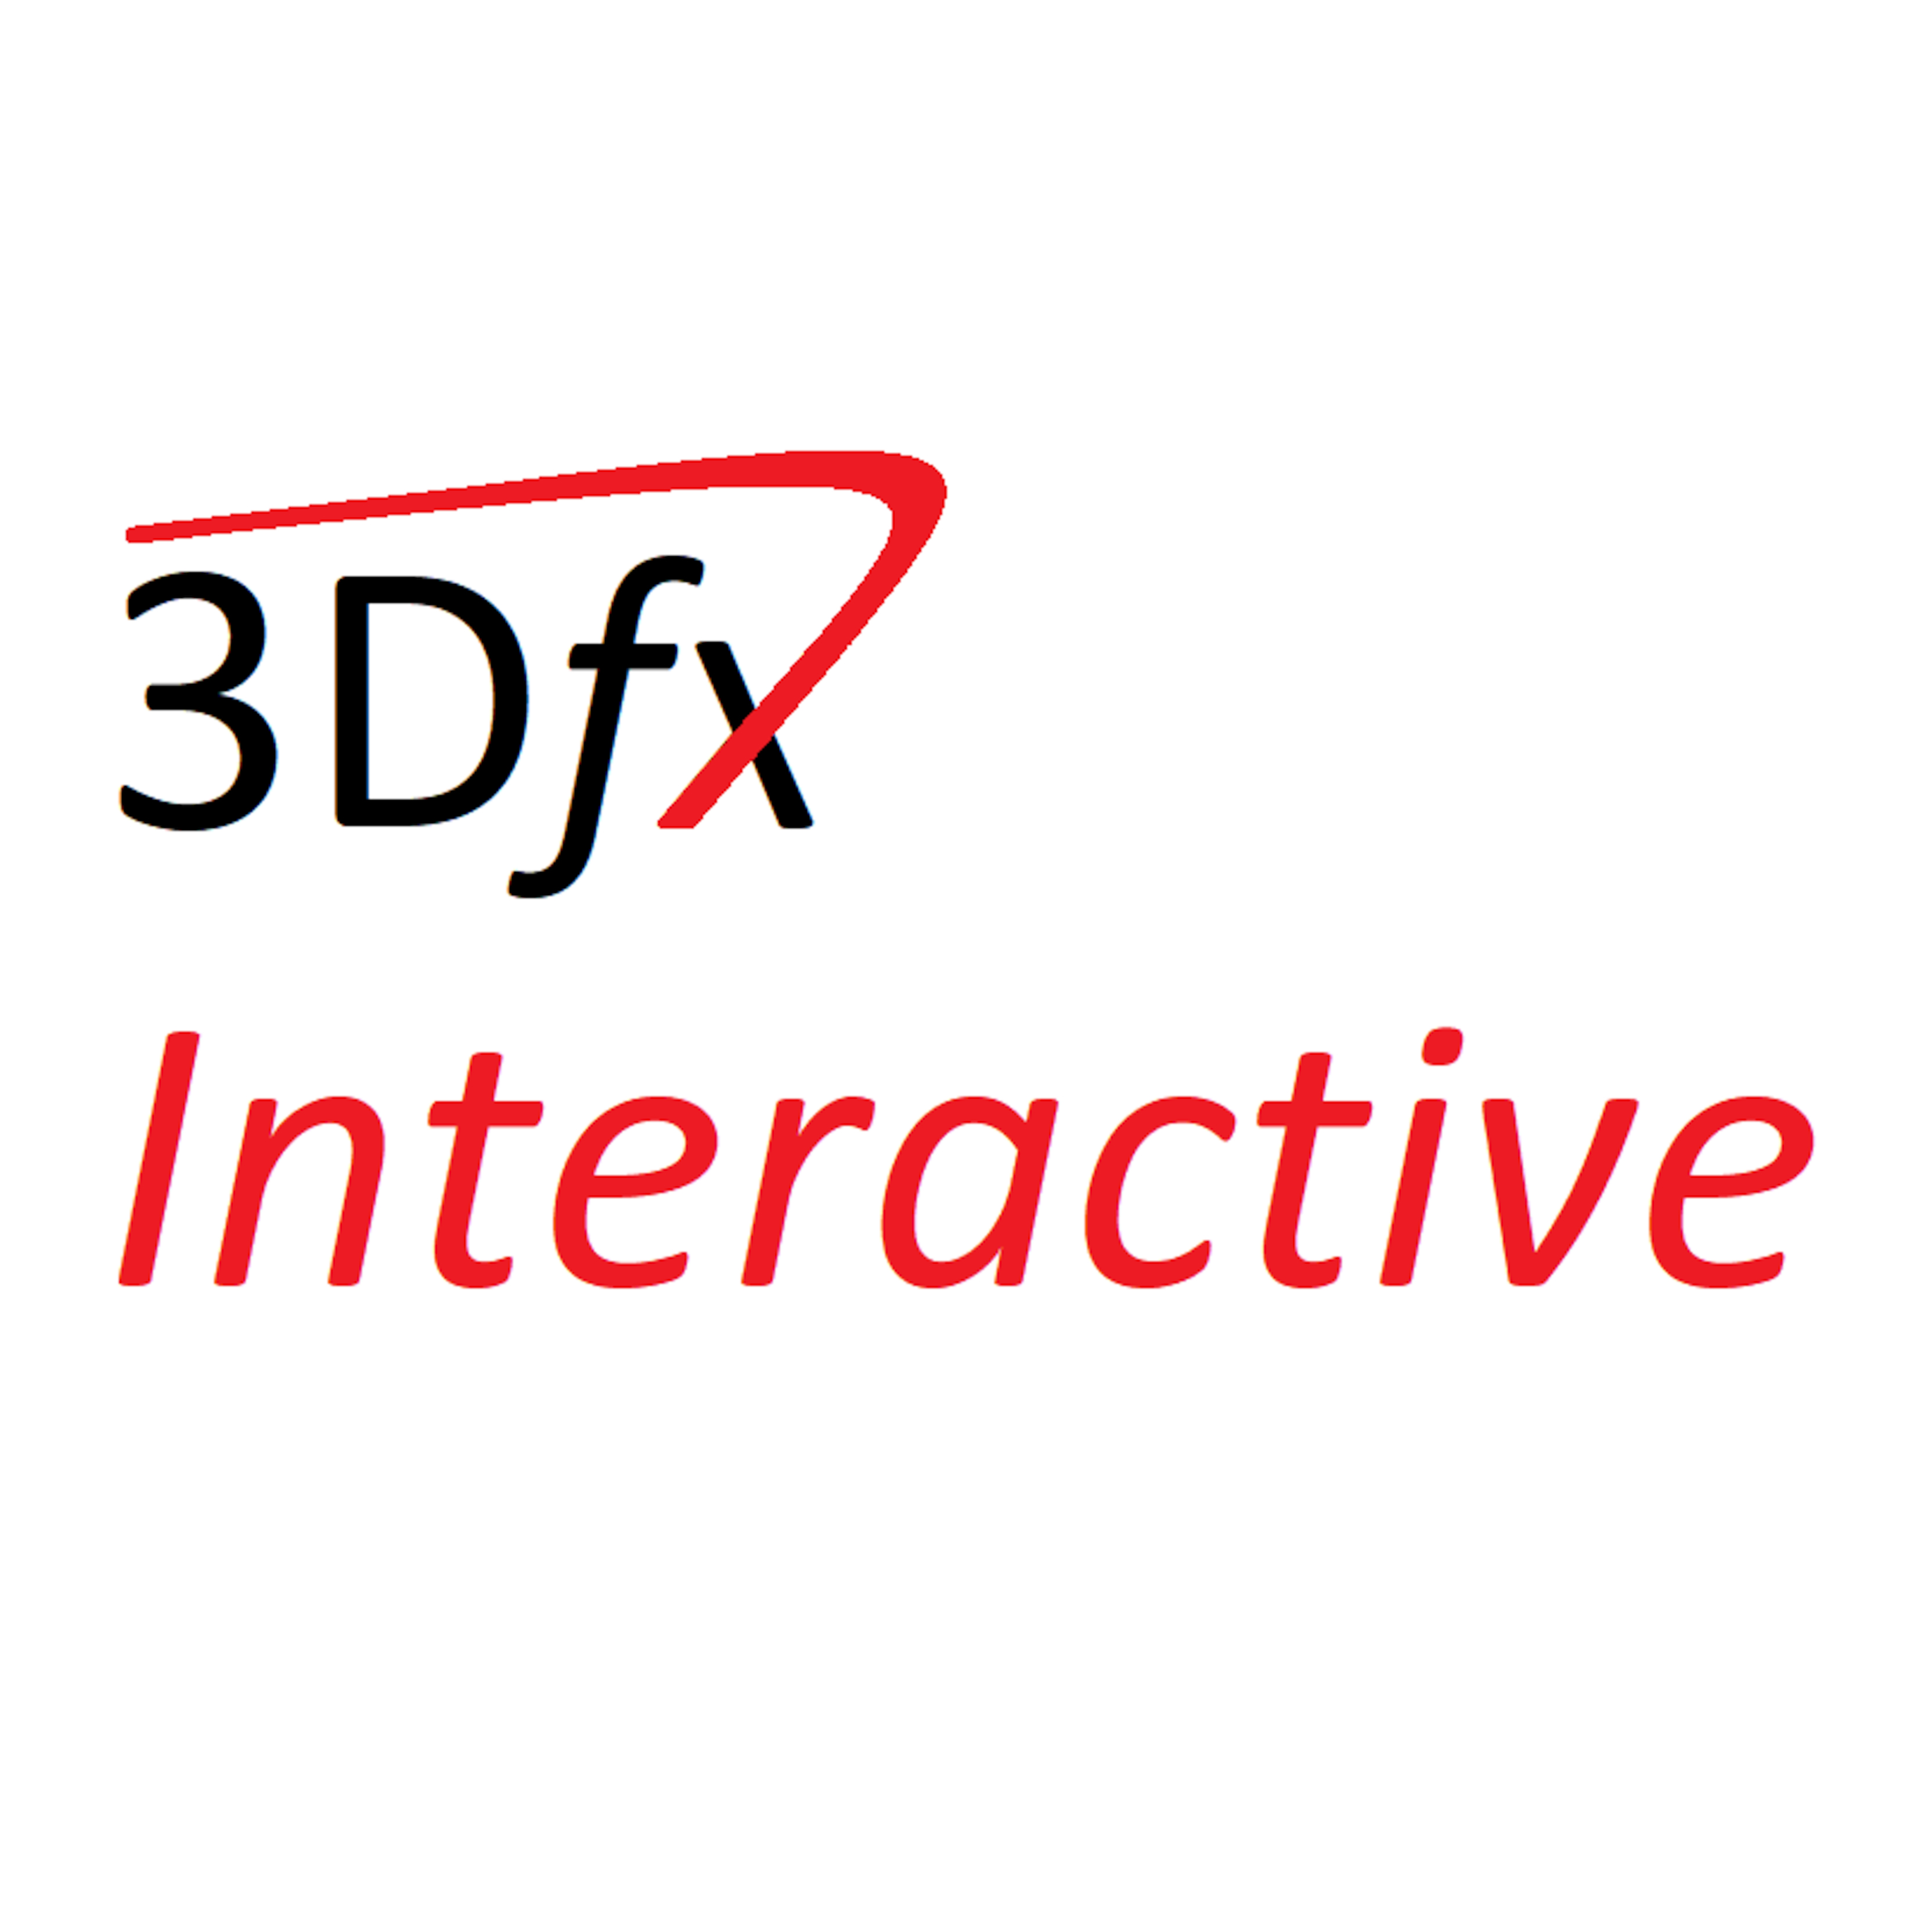 JPG 3Dfx Interactive Pullover.jpg